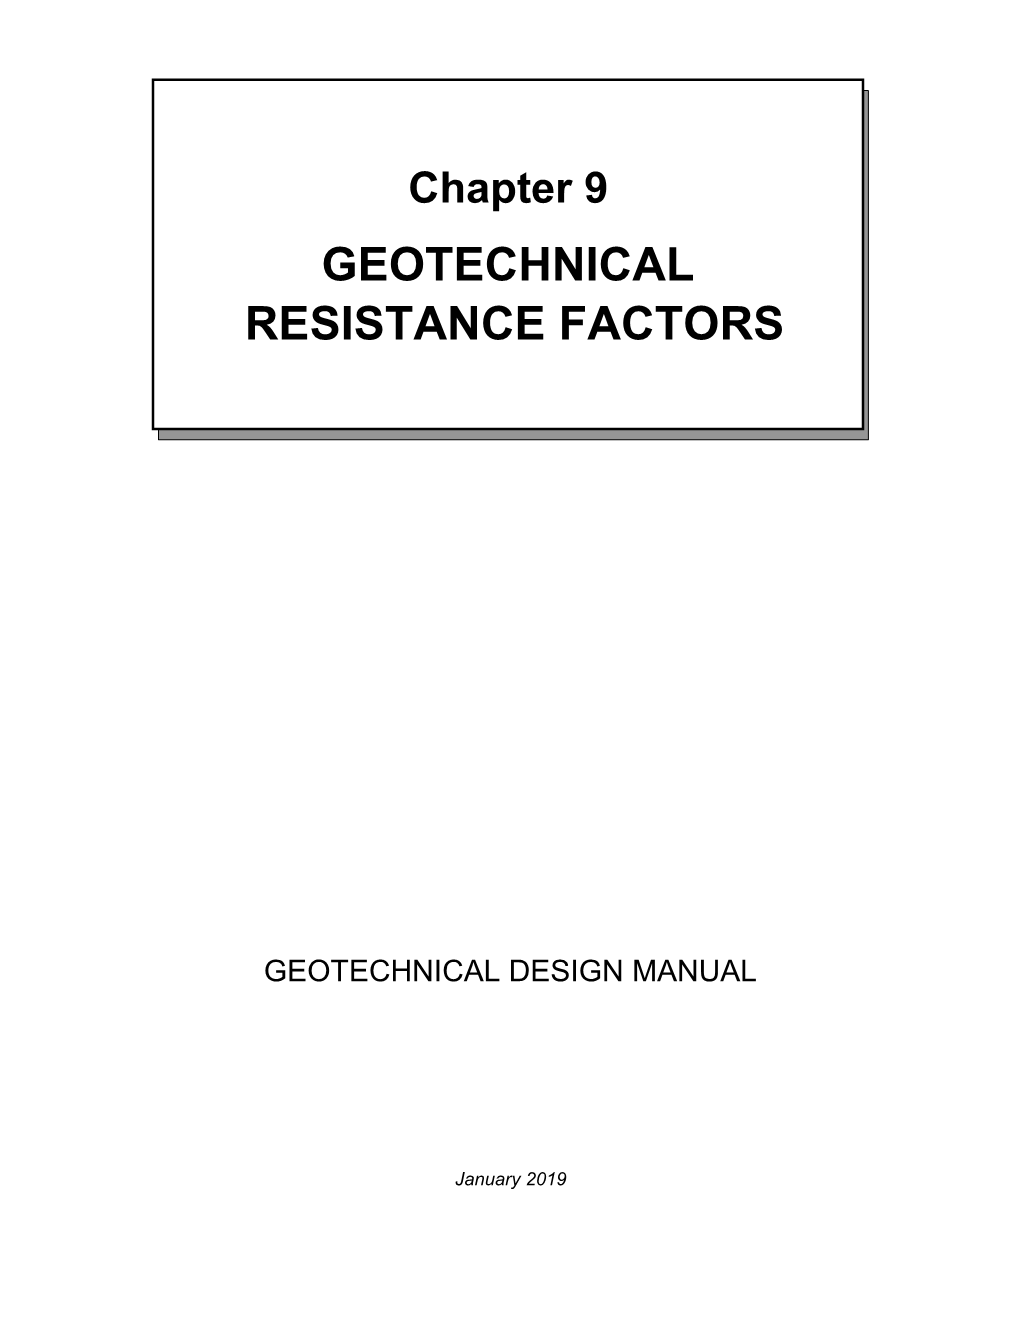 Geotechnical Resistance Factors